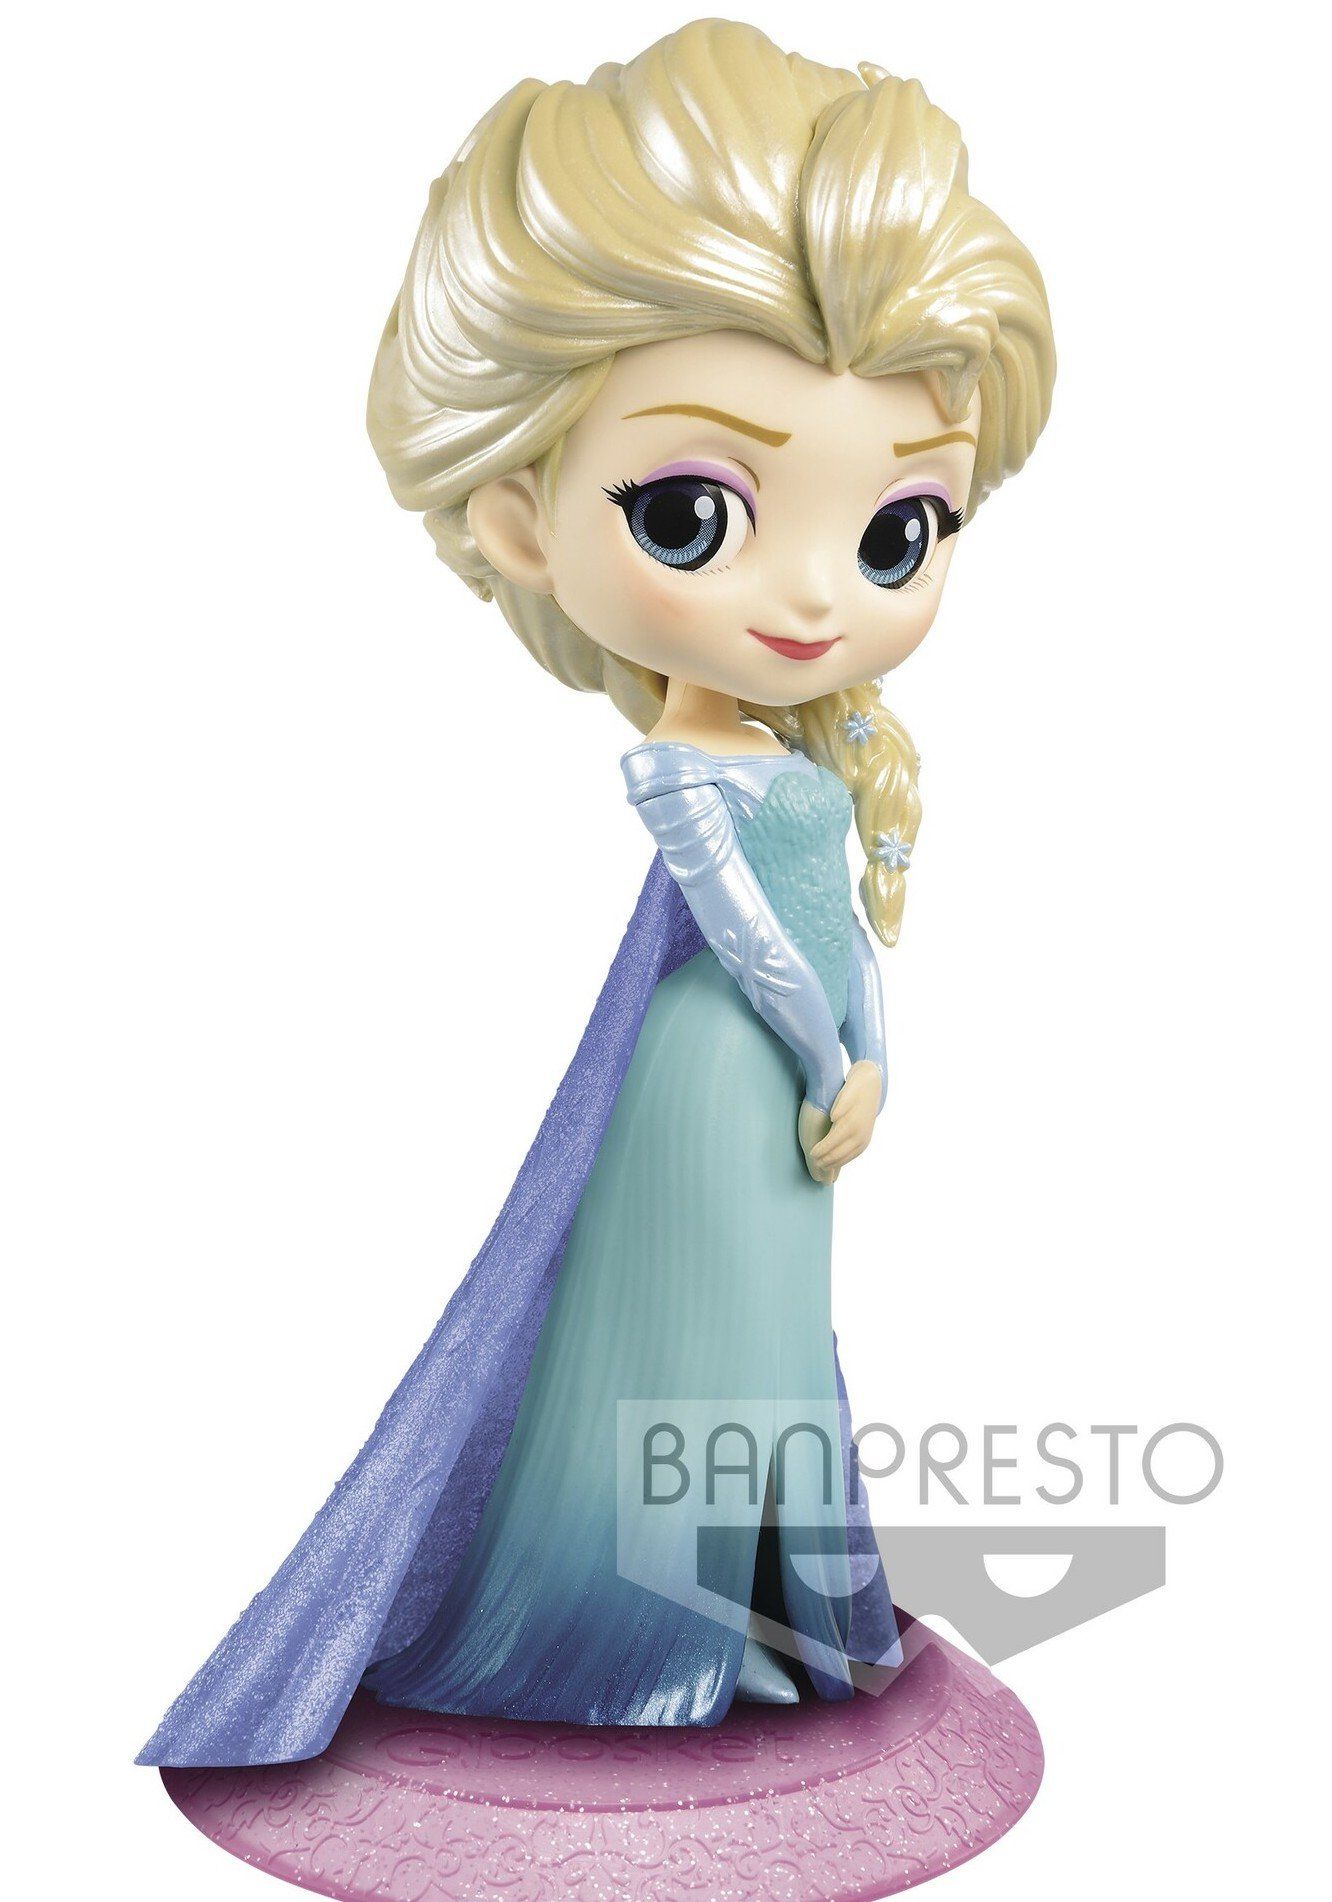 Disney Characters - Q Posket Elsa Glitter Line Figure 14cm